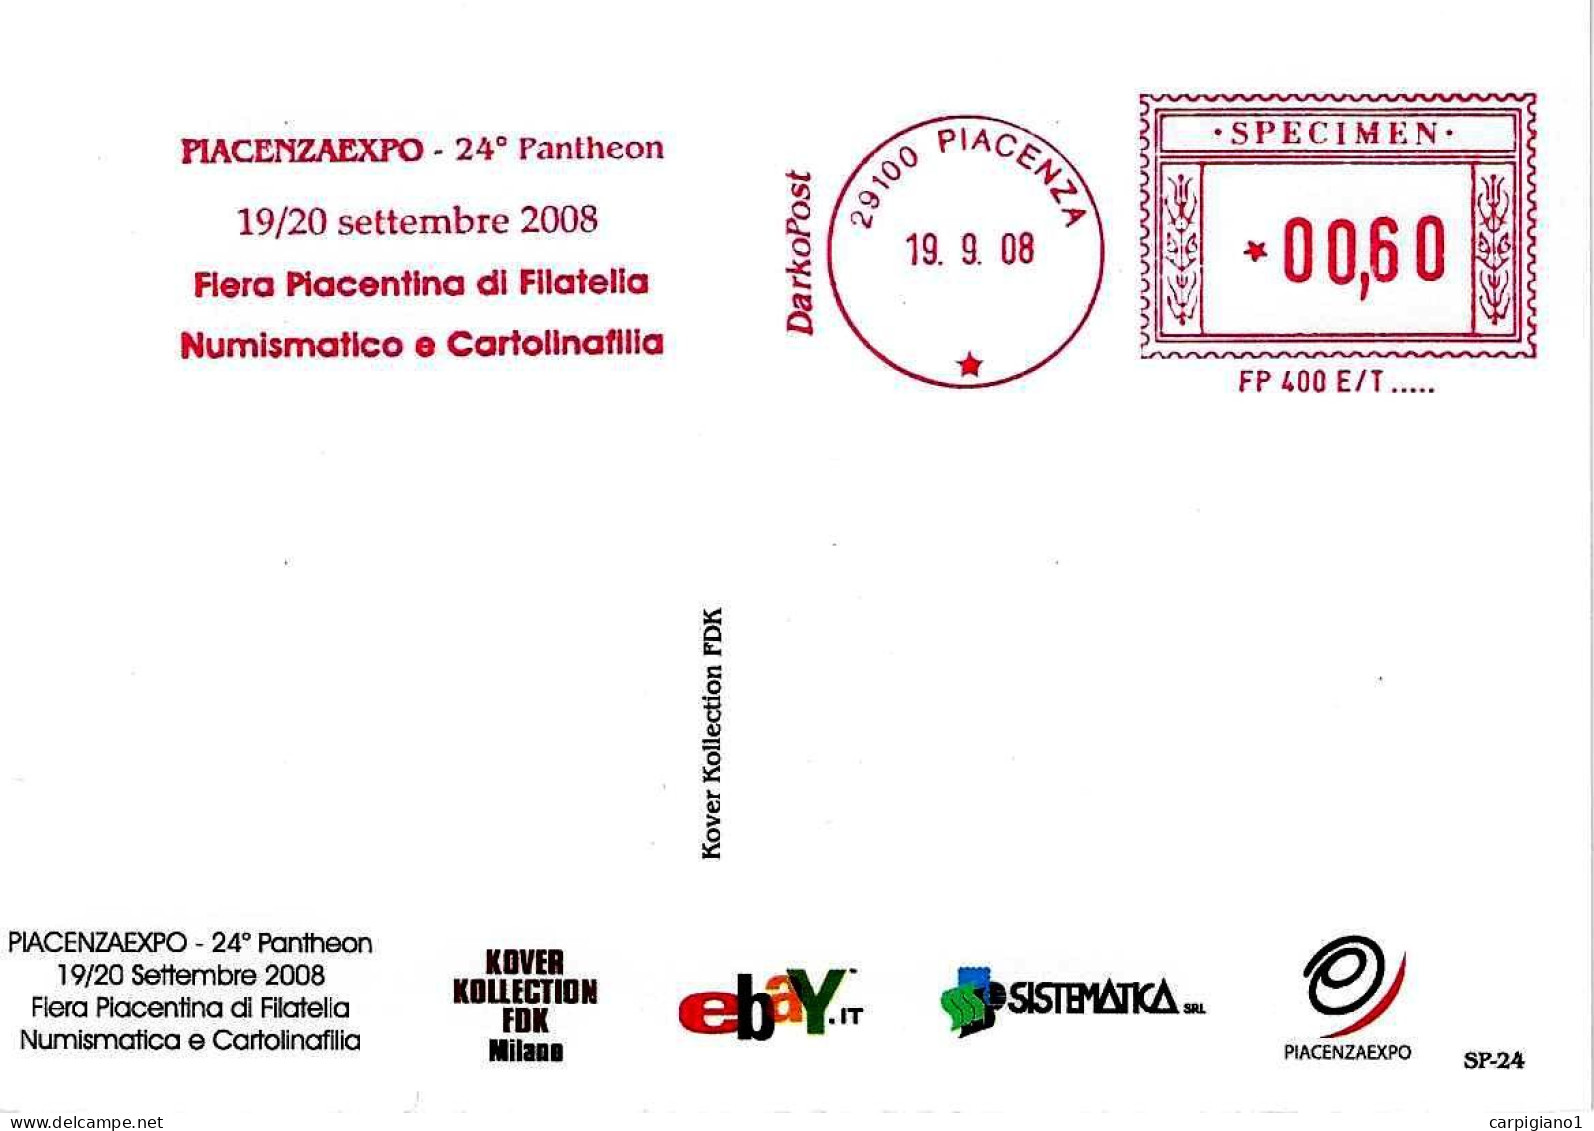 ITALIA - 2008 PIACENZA 24° Pantheon Piacenzaexpo Fiera Filatelia - Ema Affrancatura Mecc. Rossa Red Meter SPECIMEN - 653 - 2001-10: Marcofilie